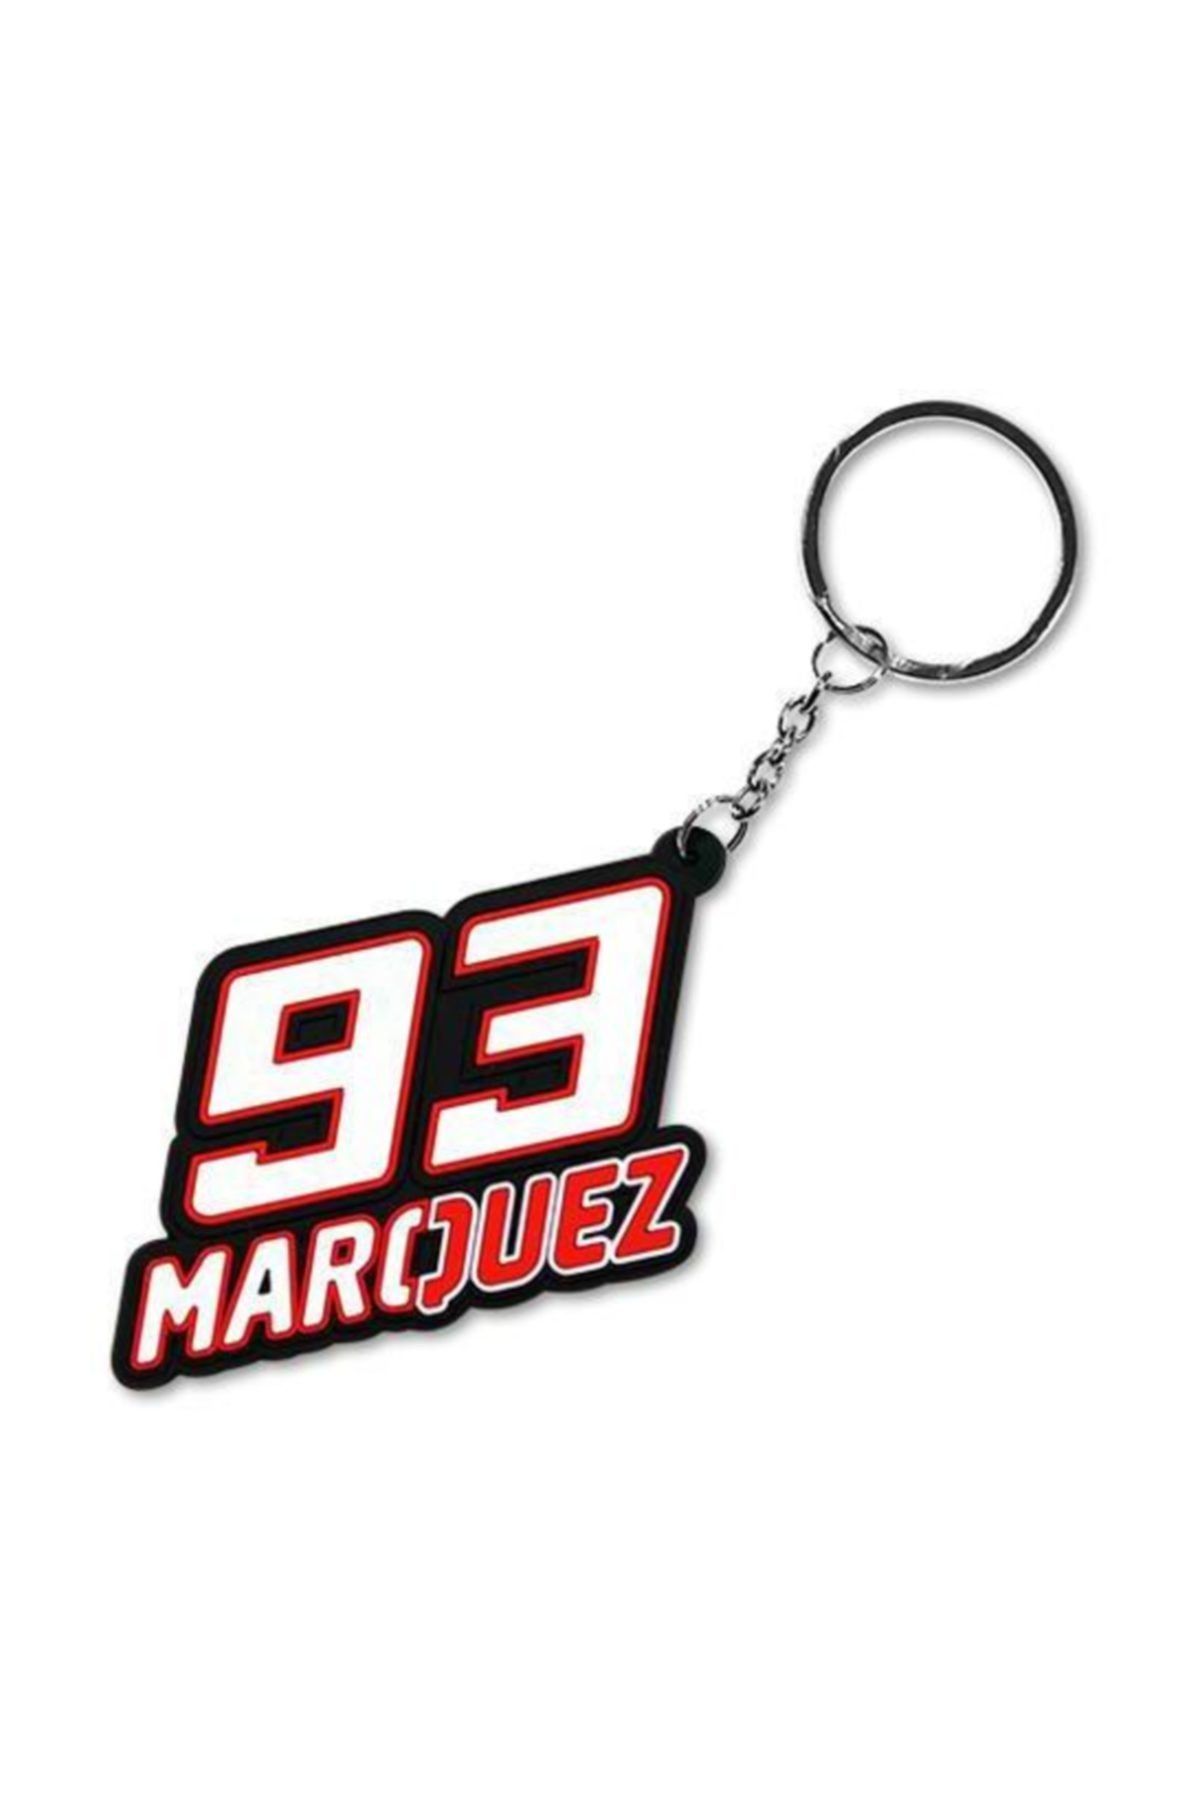 Knmaster 93 Marquez Anahtarlık